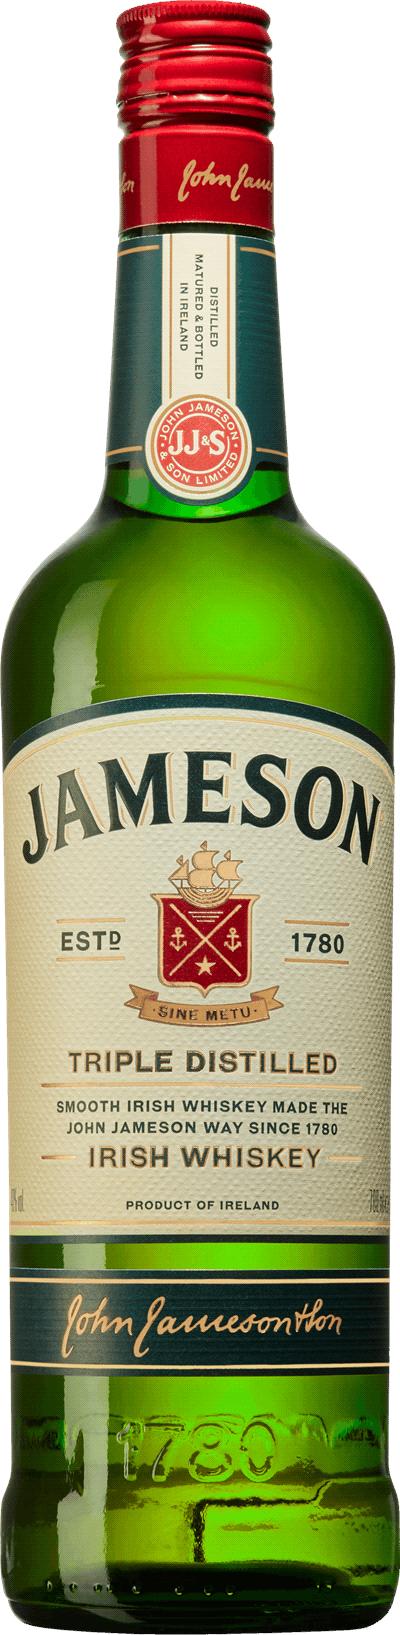 Jameson Orange Irish Whiskey, 750 mL Bottle, 30% ABV 